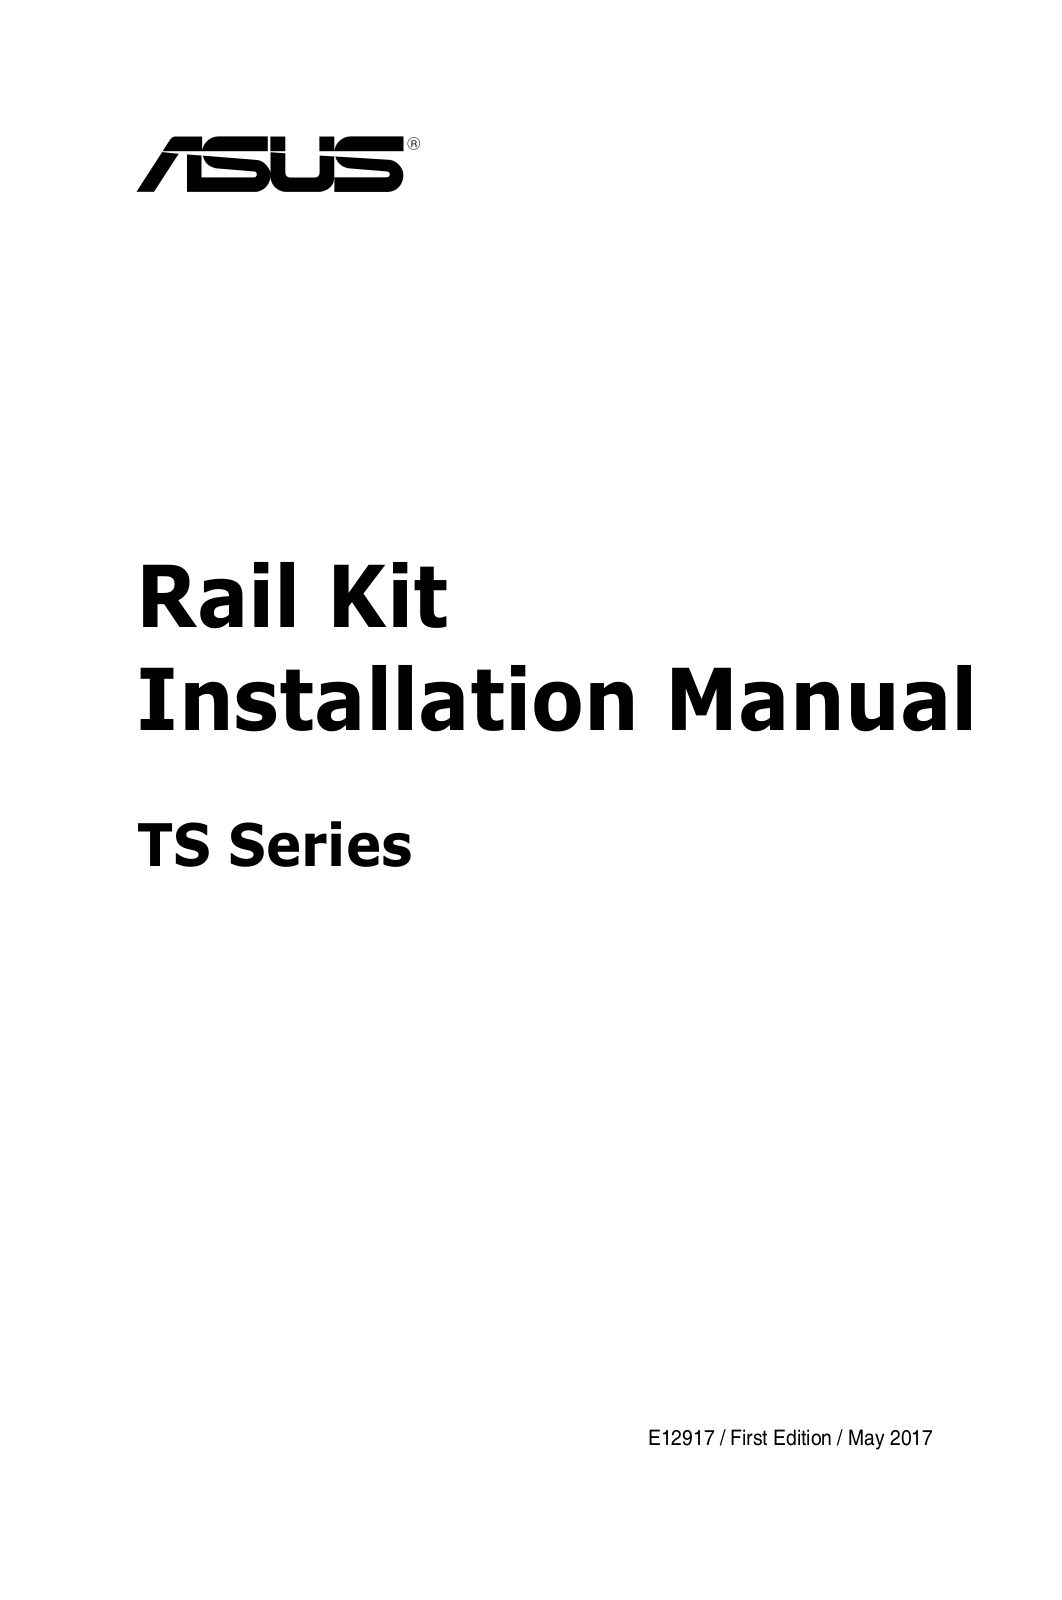 Asus TS300-E9-PS4 Rail Kit Installation Manual